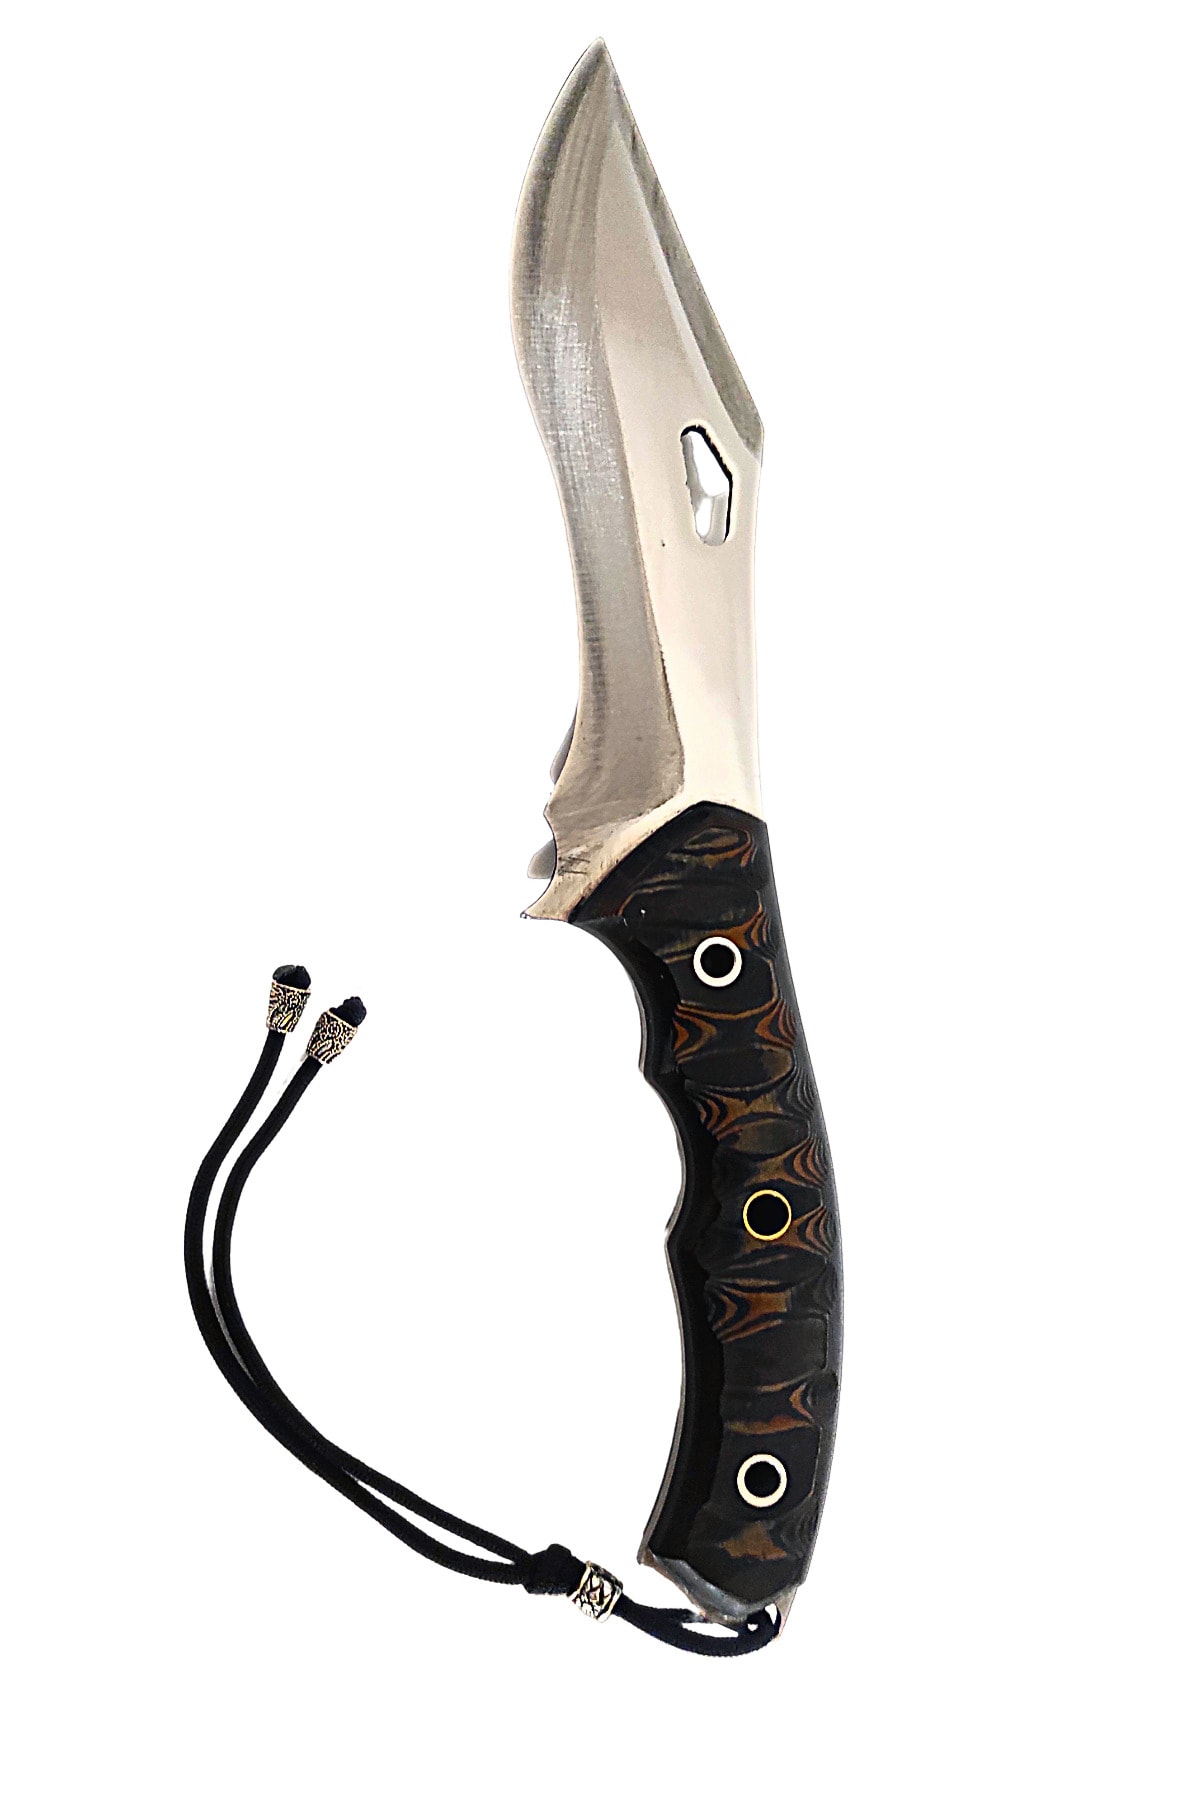 AKSOY Kamp Bıçağı - Outdoor Deri Kılıflı Bıçak - Aksesuar